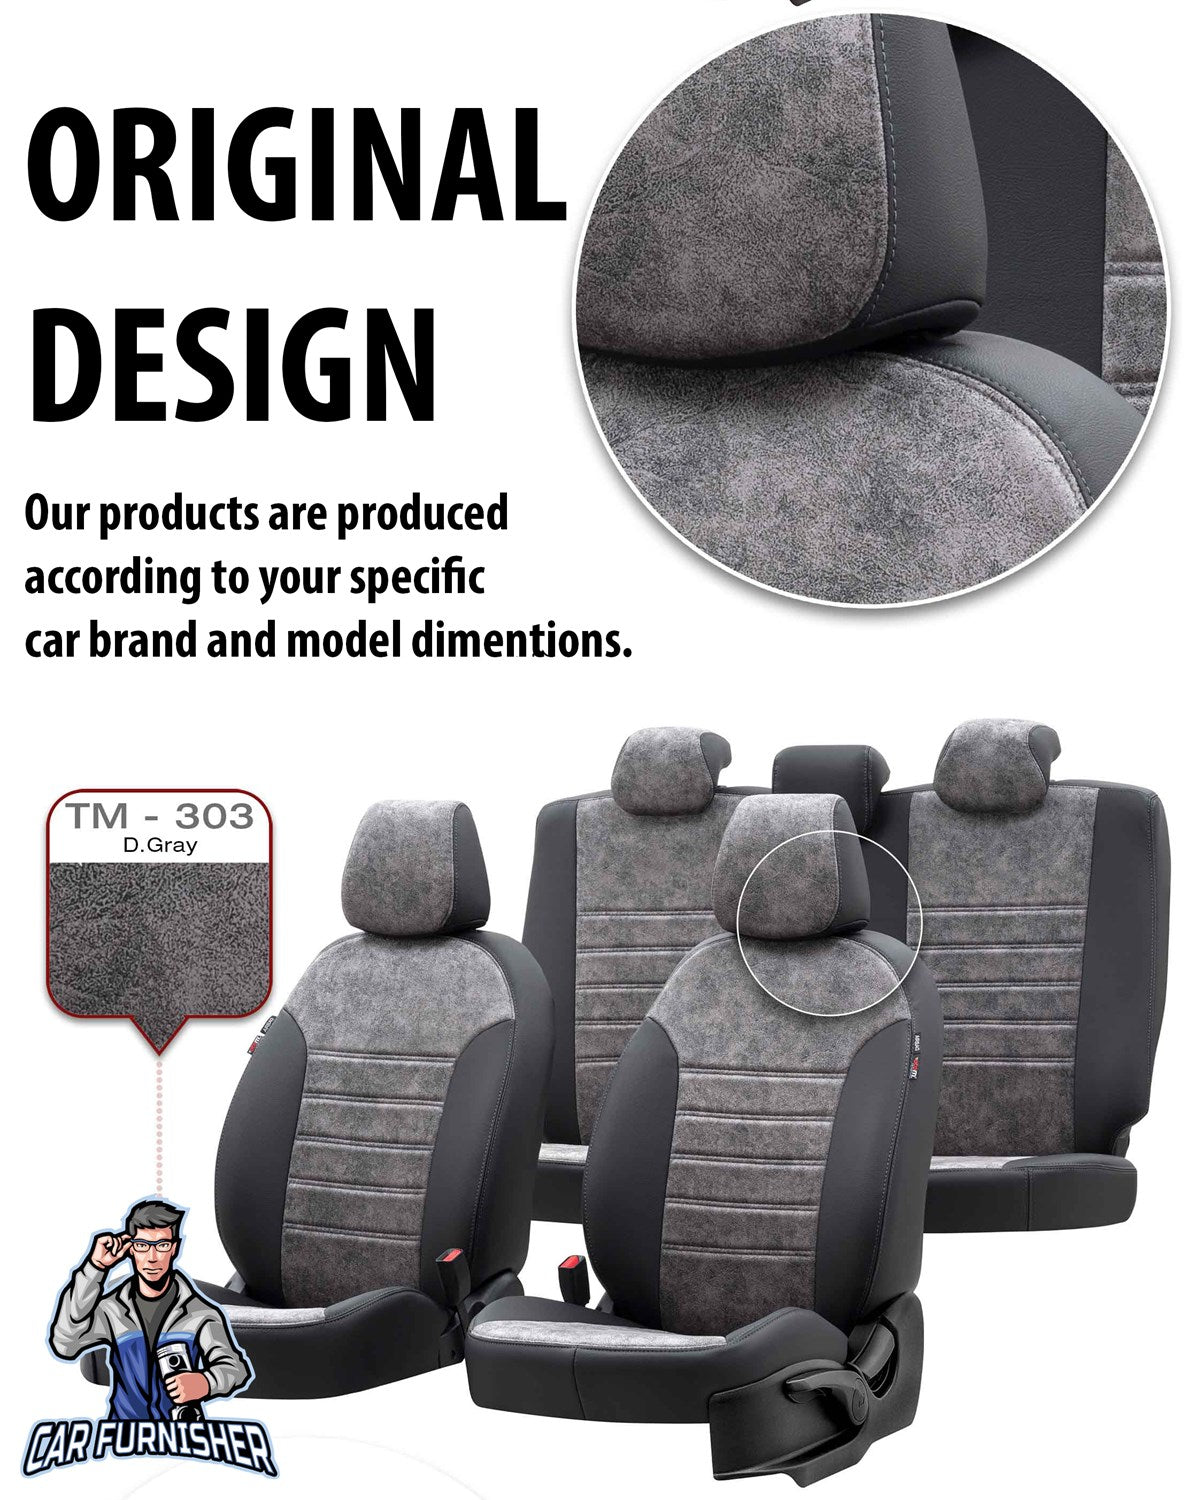 Toyota Prius Seat Cover Milano Suede Design Beige Leather & Suede Fabric